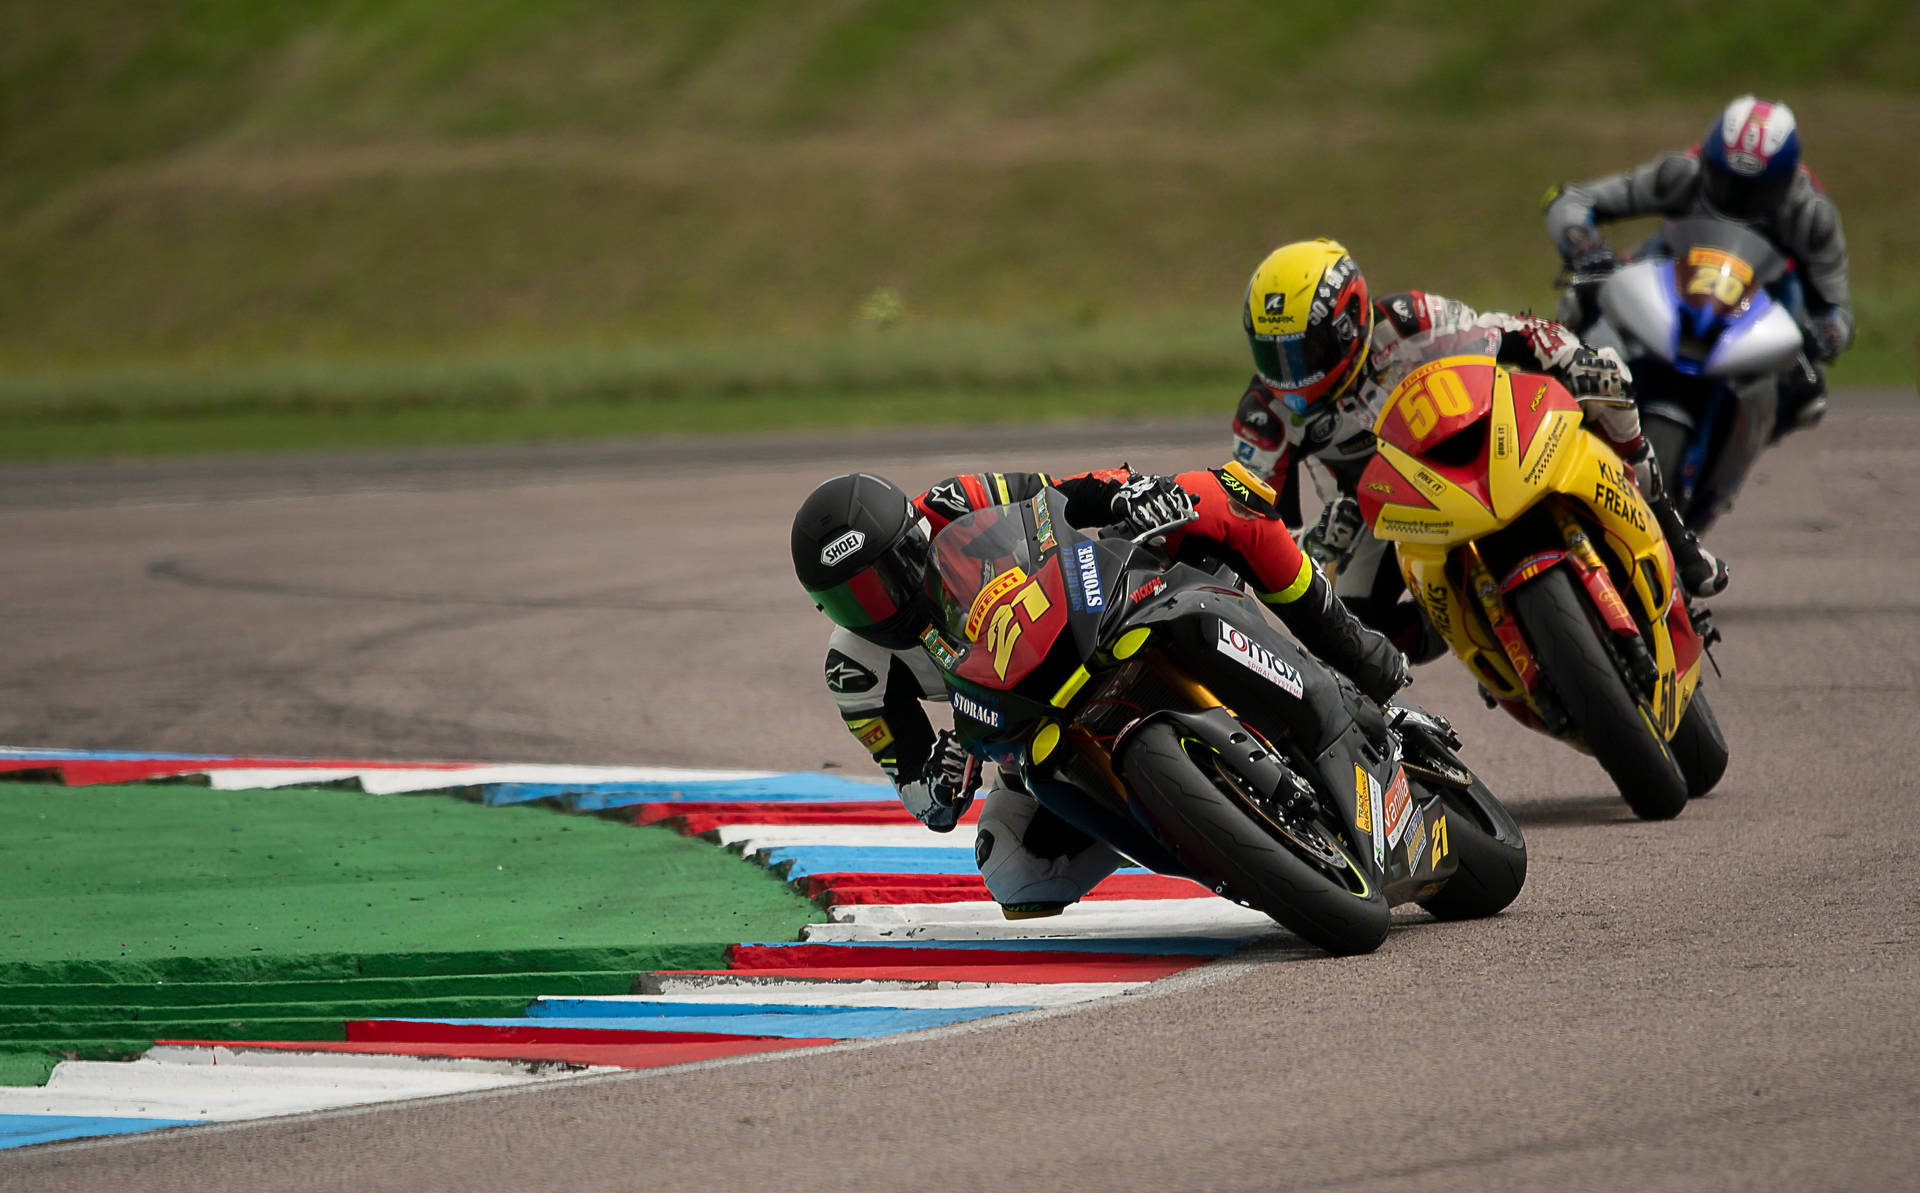 Caption: Dynamic Superbike Racing On Track